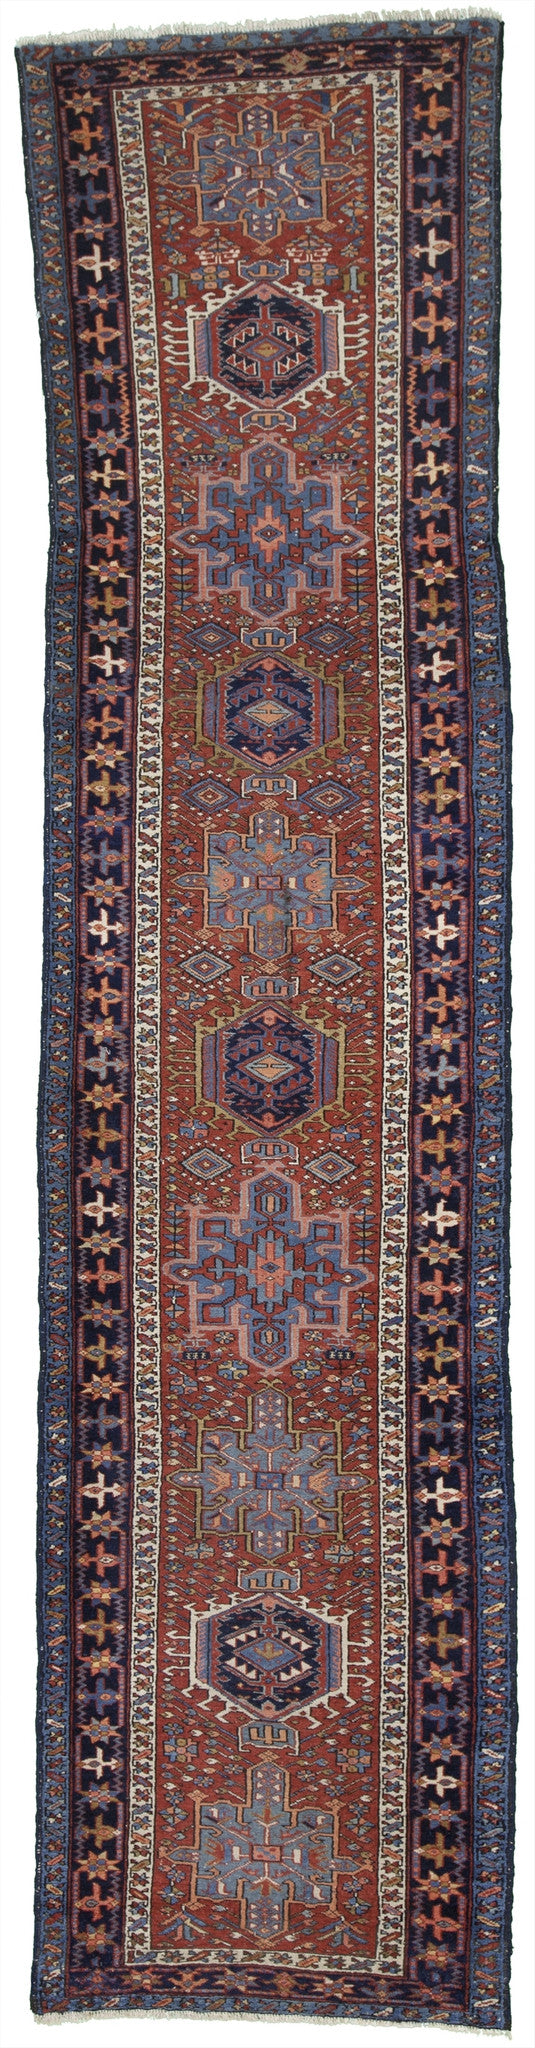 Antique Persian Karajeh Runner Rug               3'x 12'6